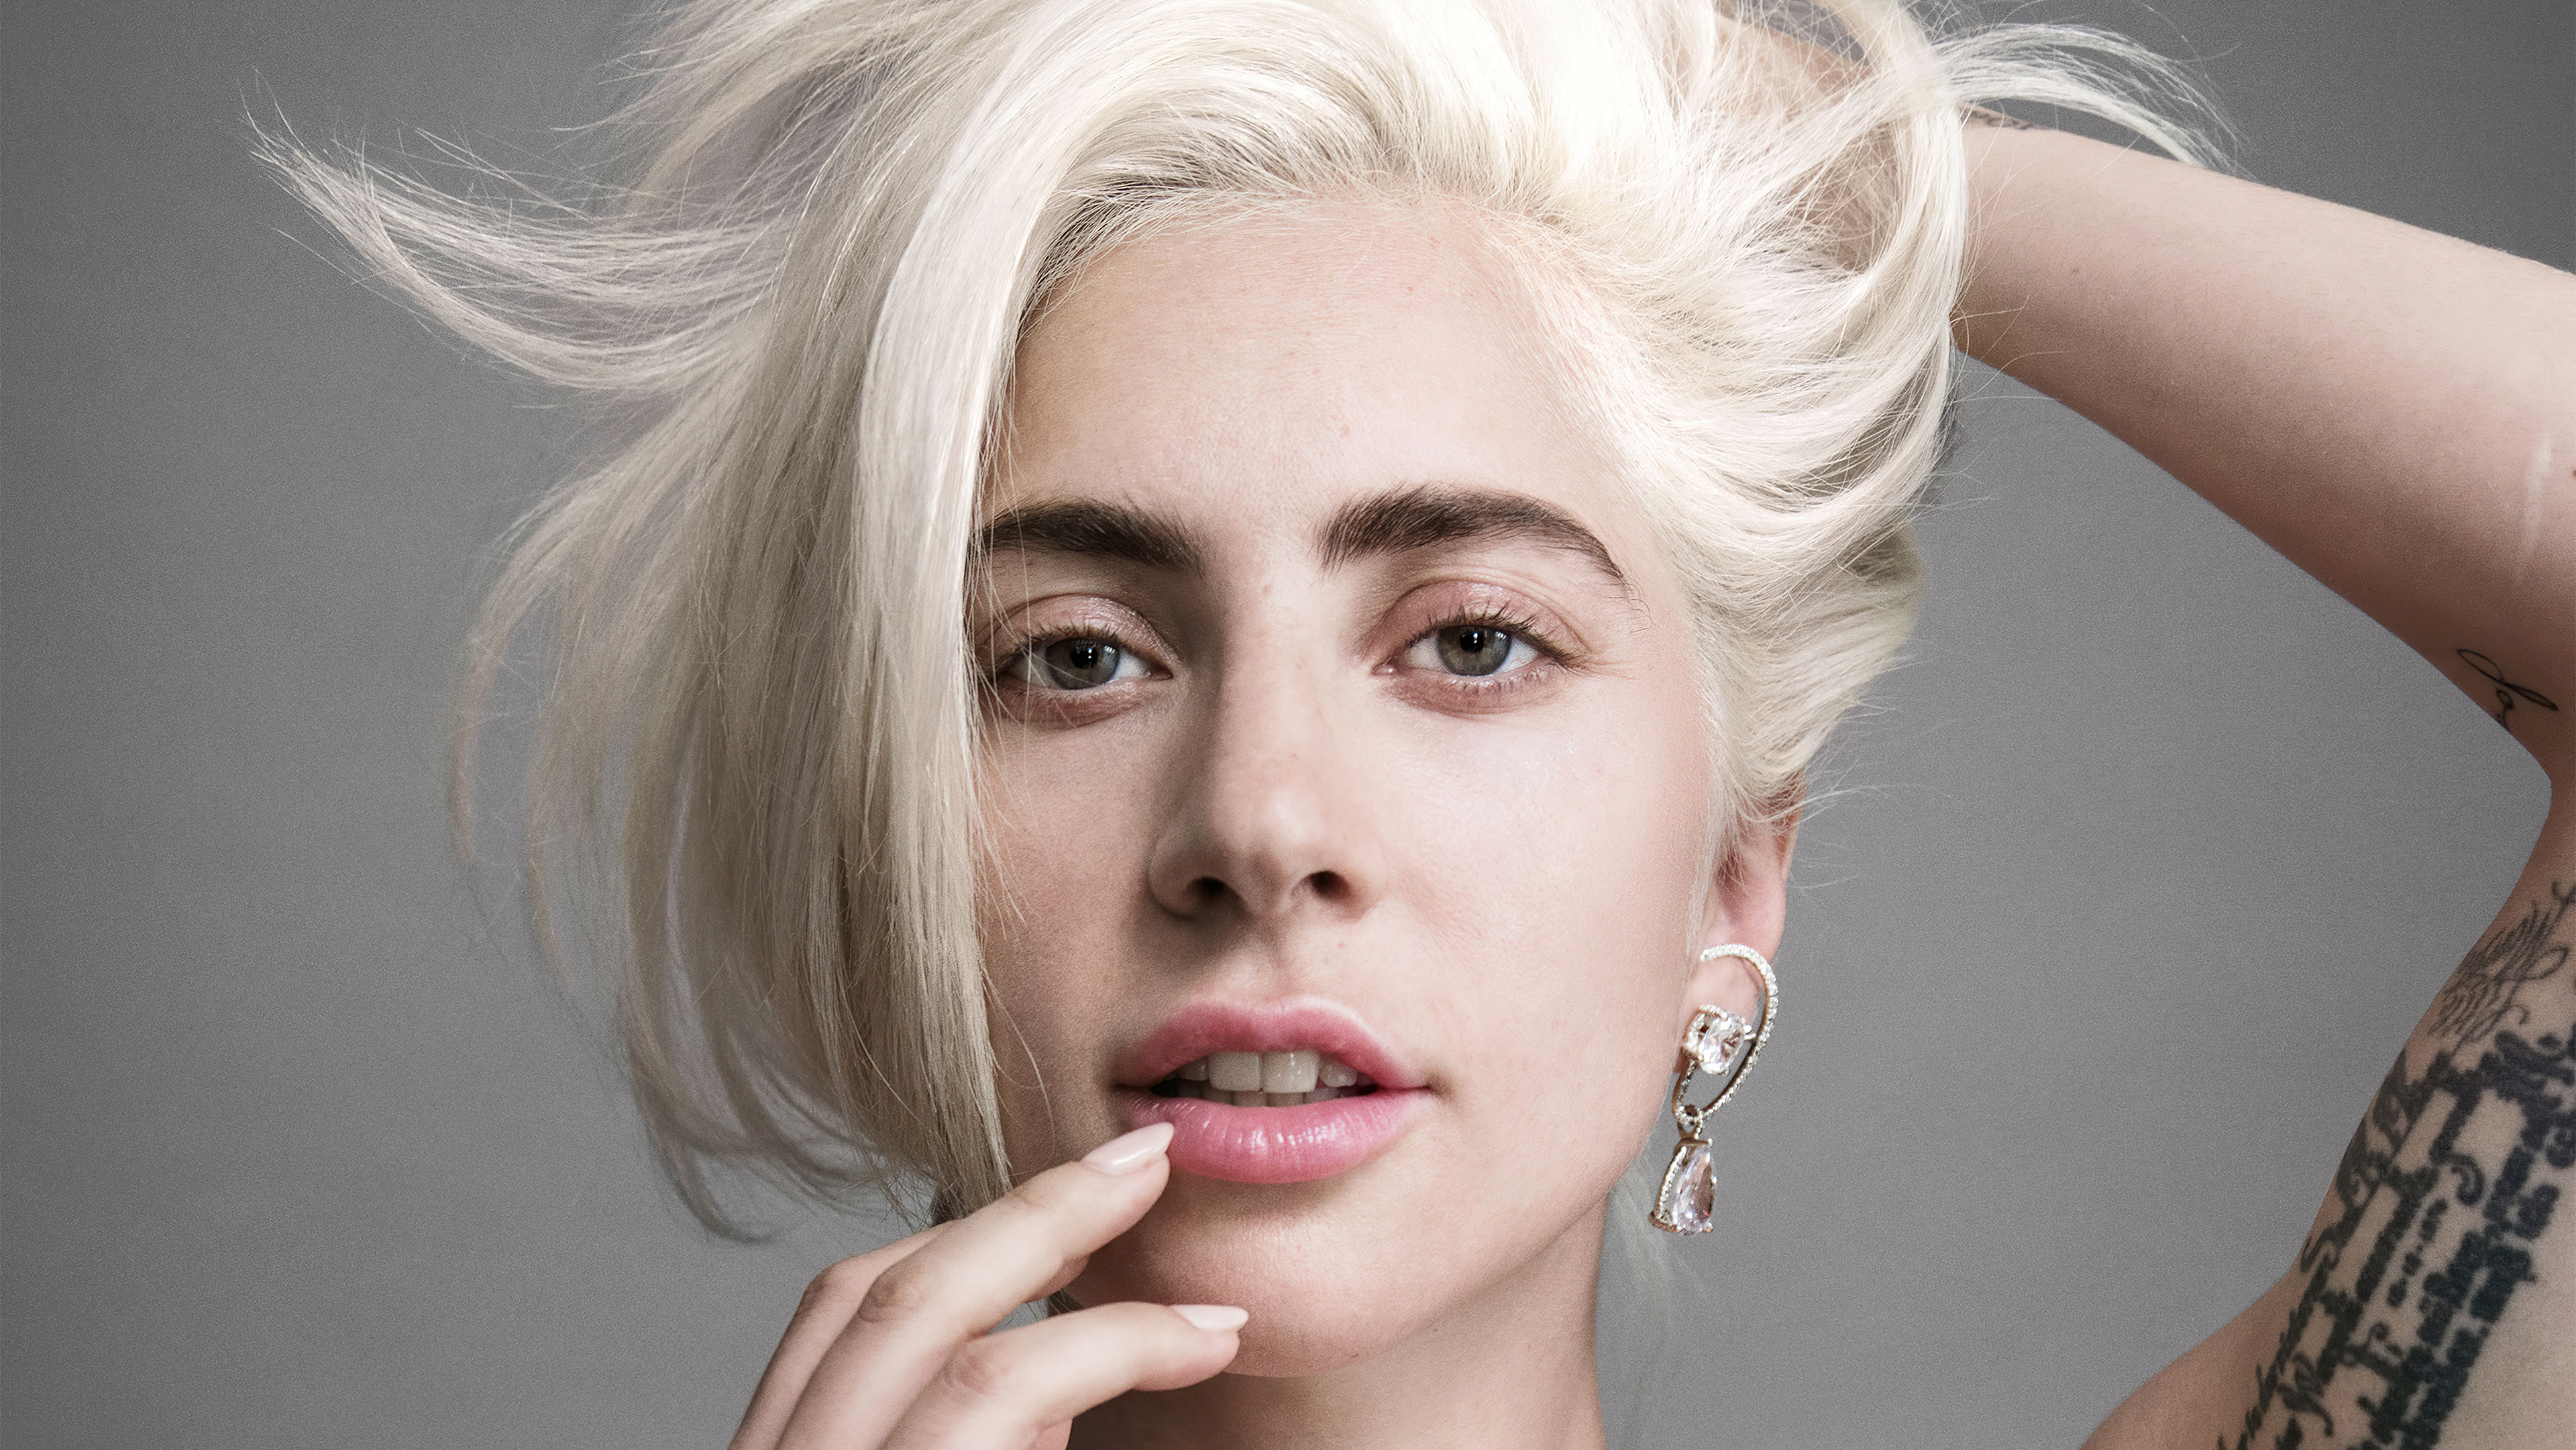 Lady Gaga without makeup 2021 Wallpaper 4k Ultra HD ID:7149